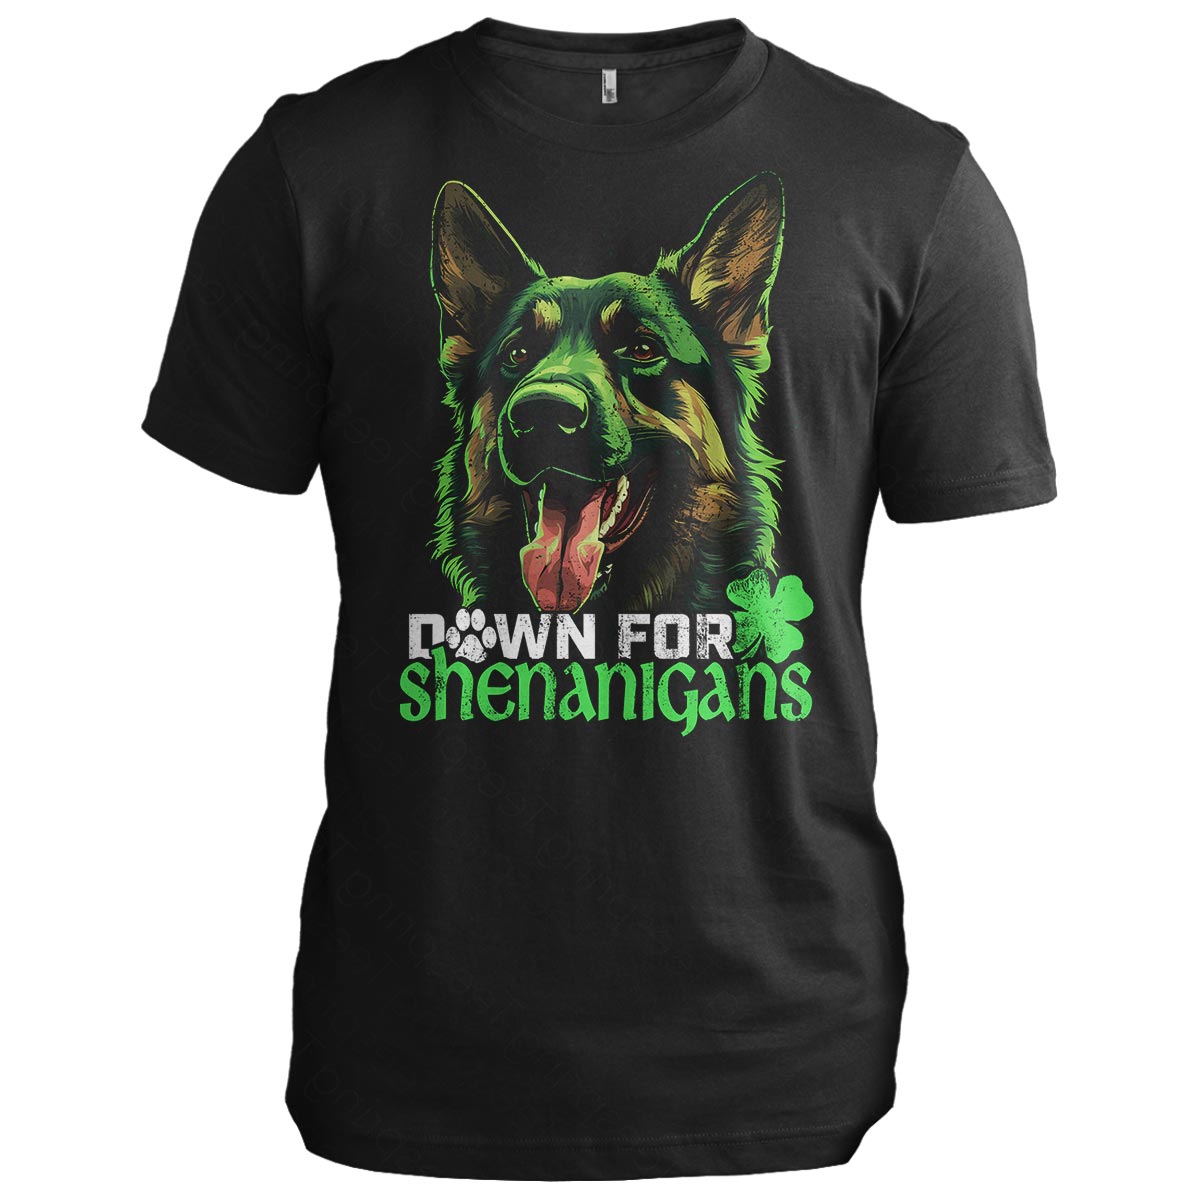 Down for Shenanigans: German Shepherd